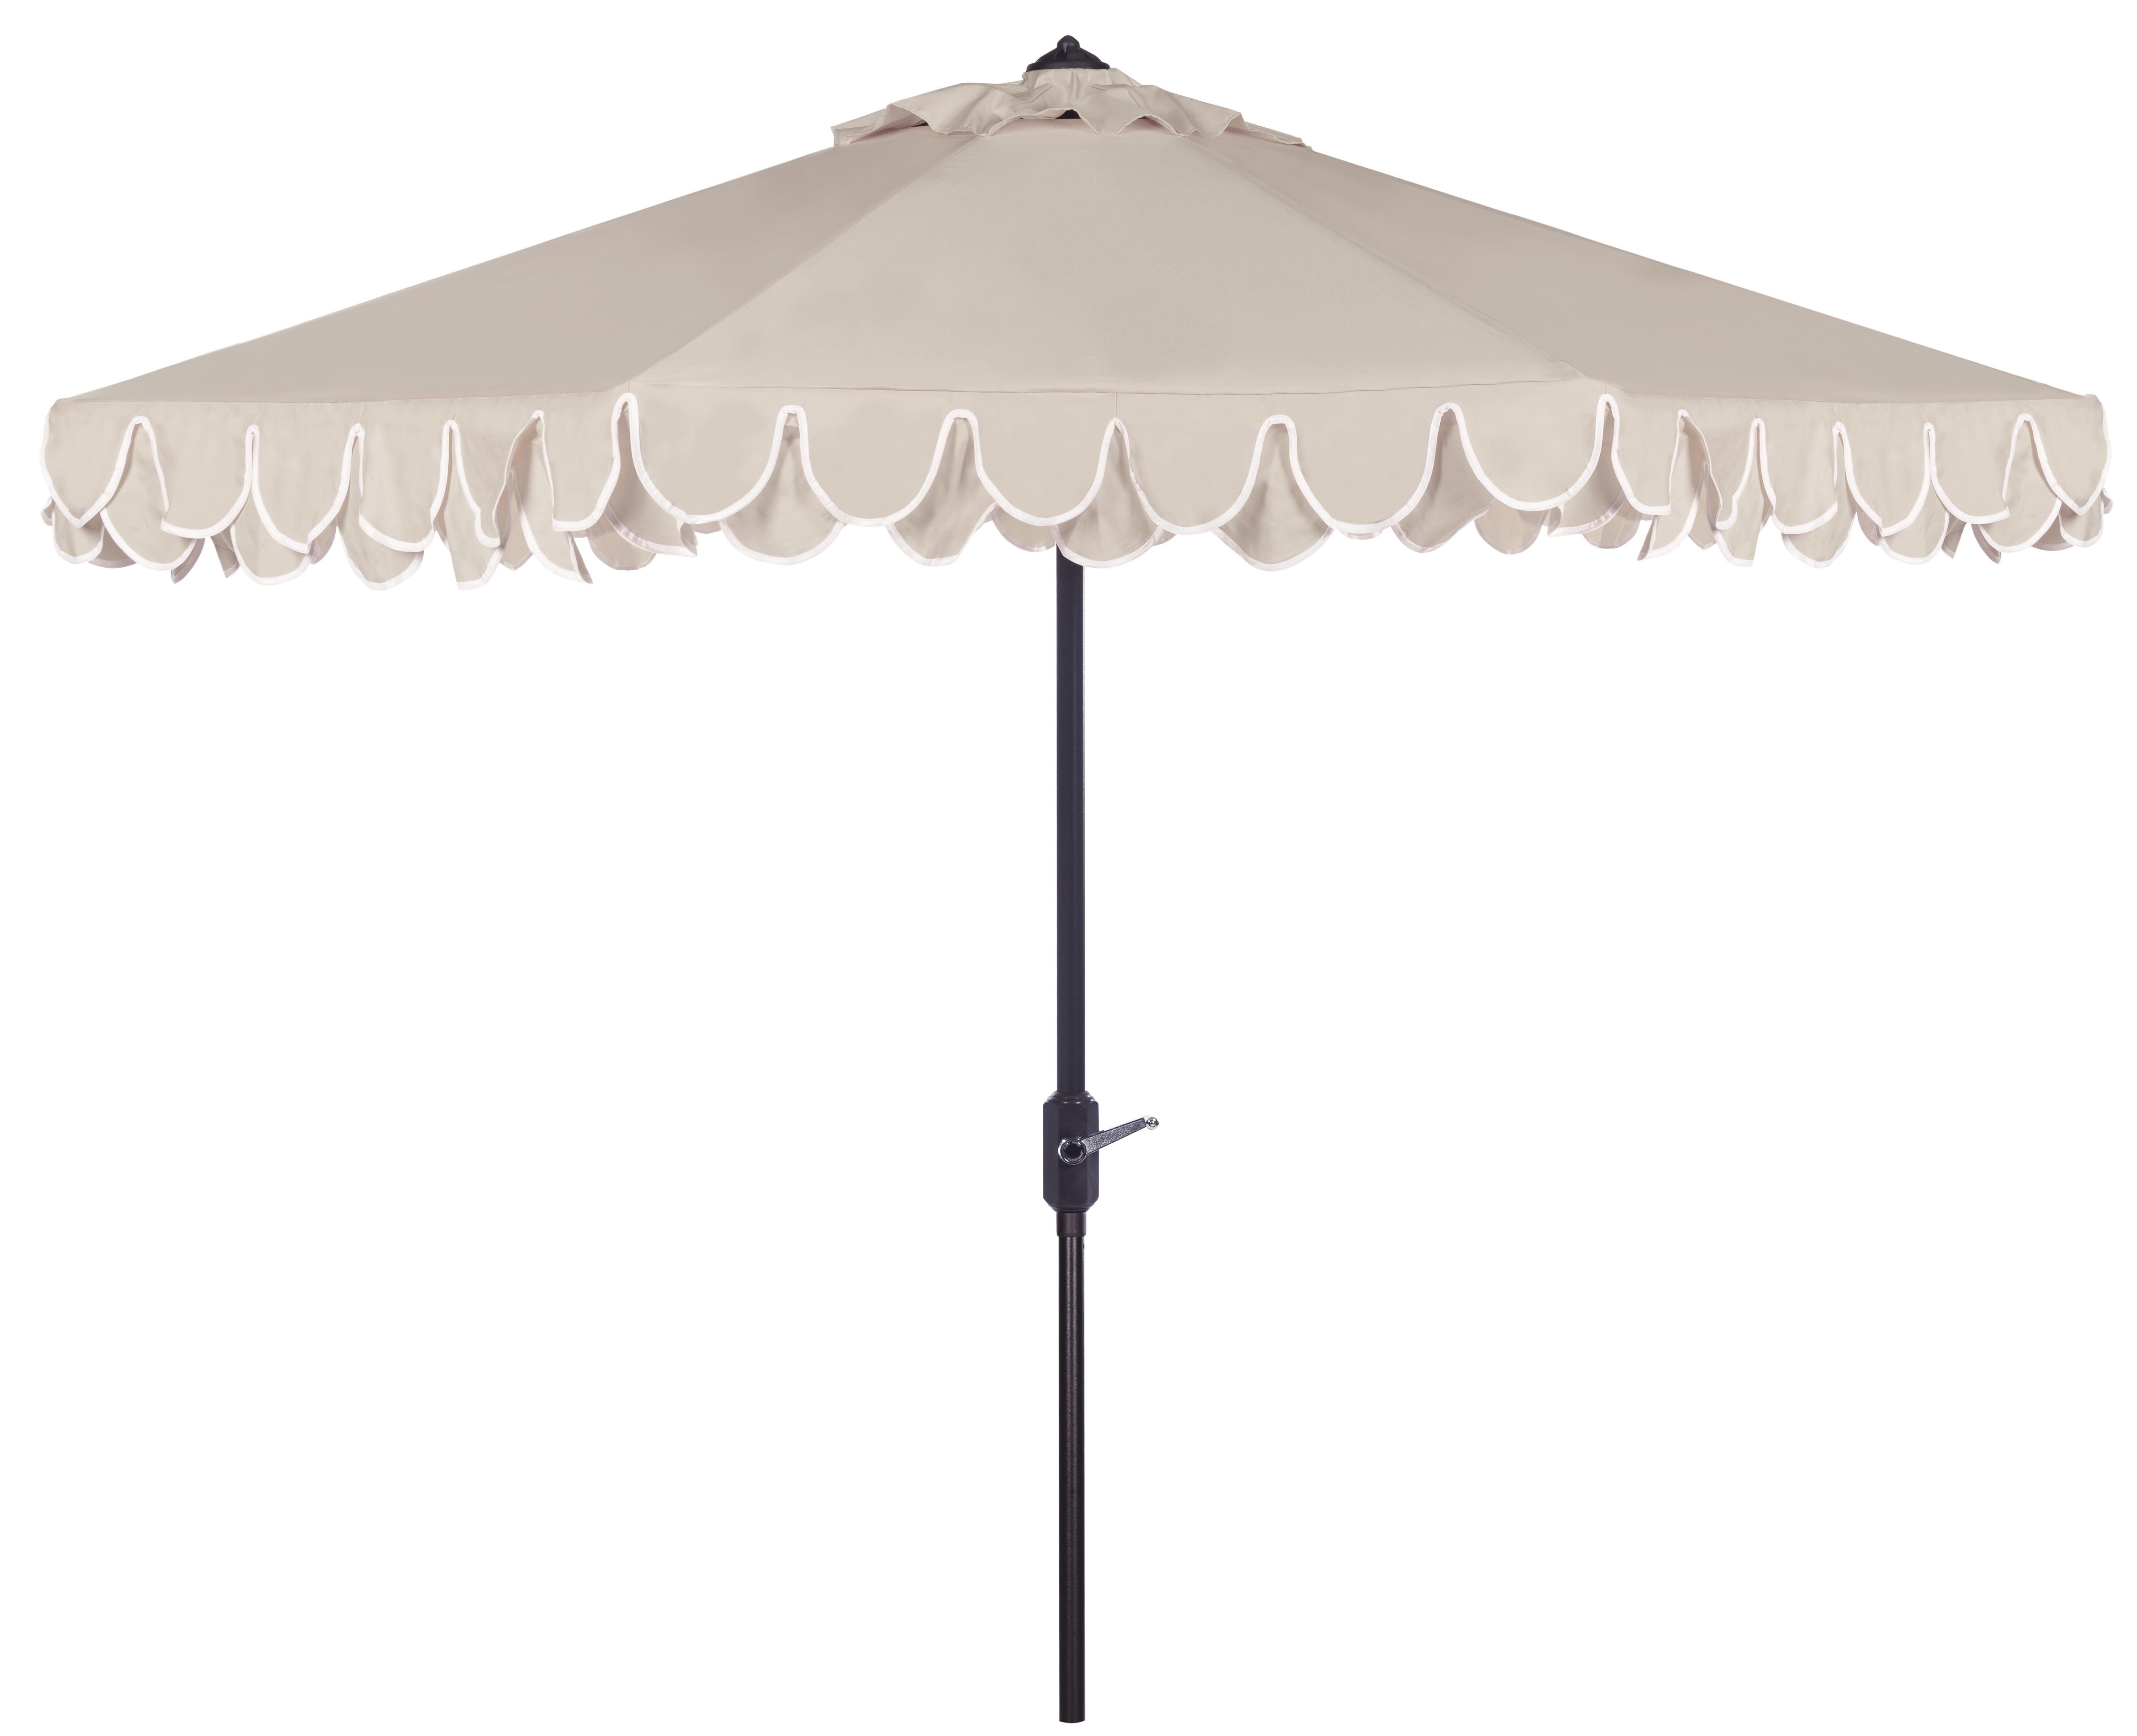 Uv Resistant Elegant Valance 9Ft Auto Tilt Umbrella - Beige/White - Safavieh - Image 0